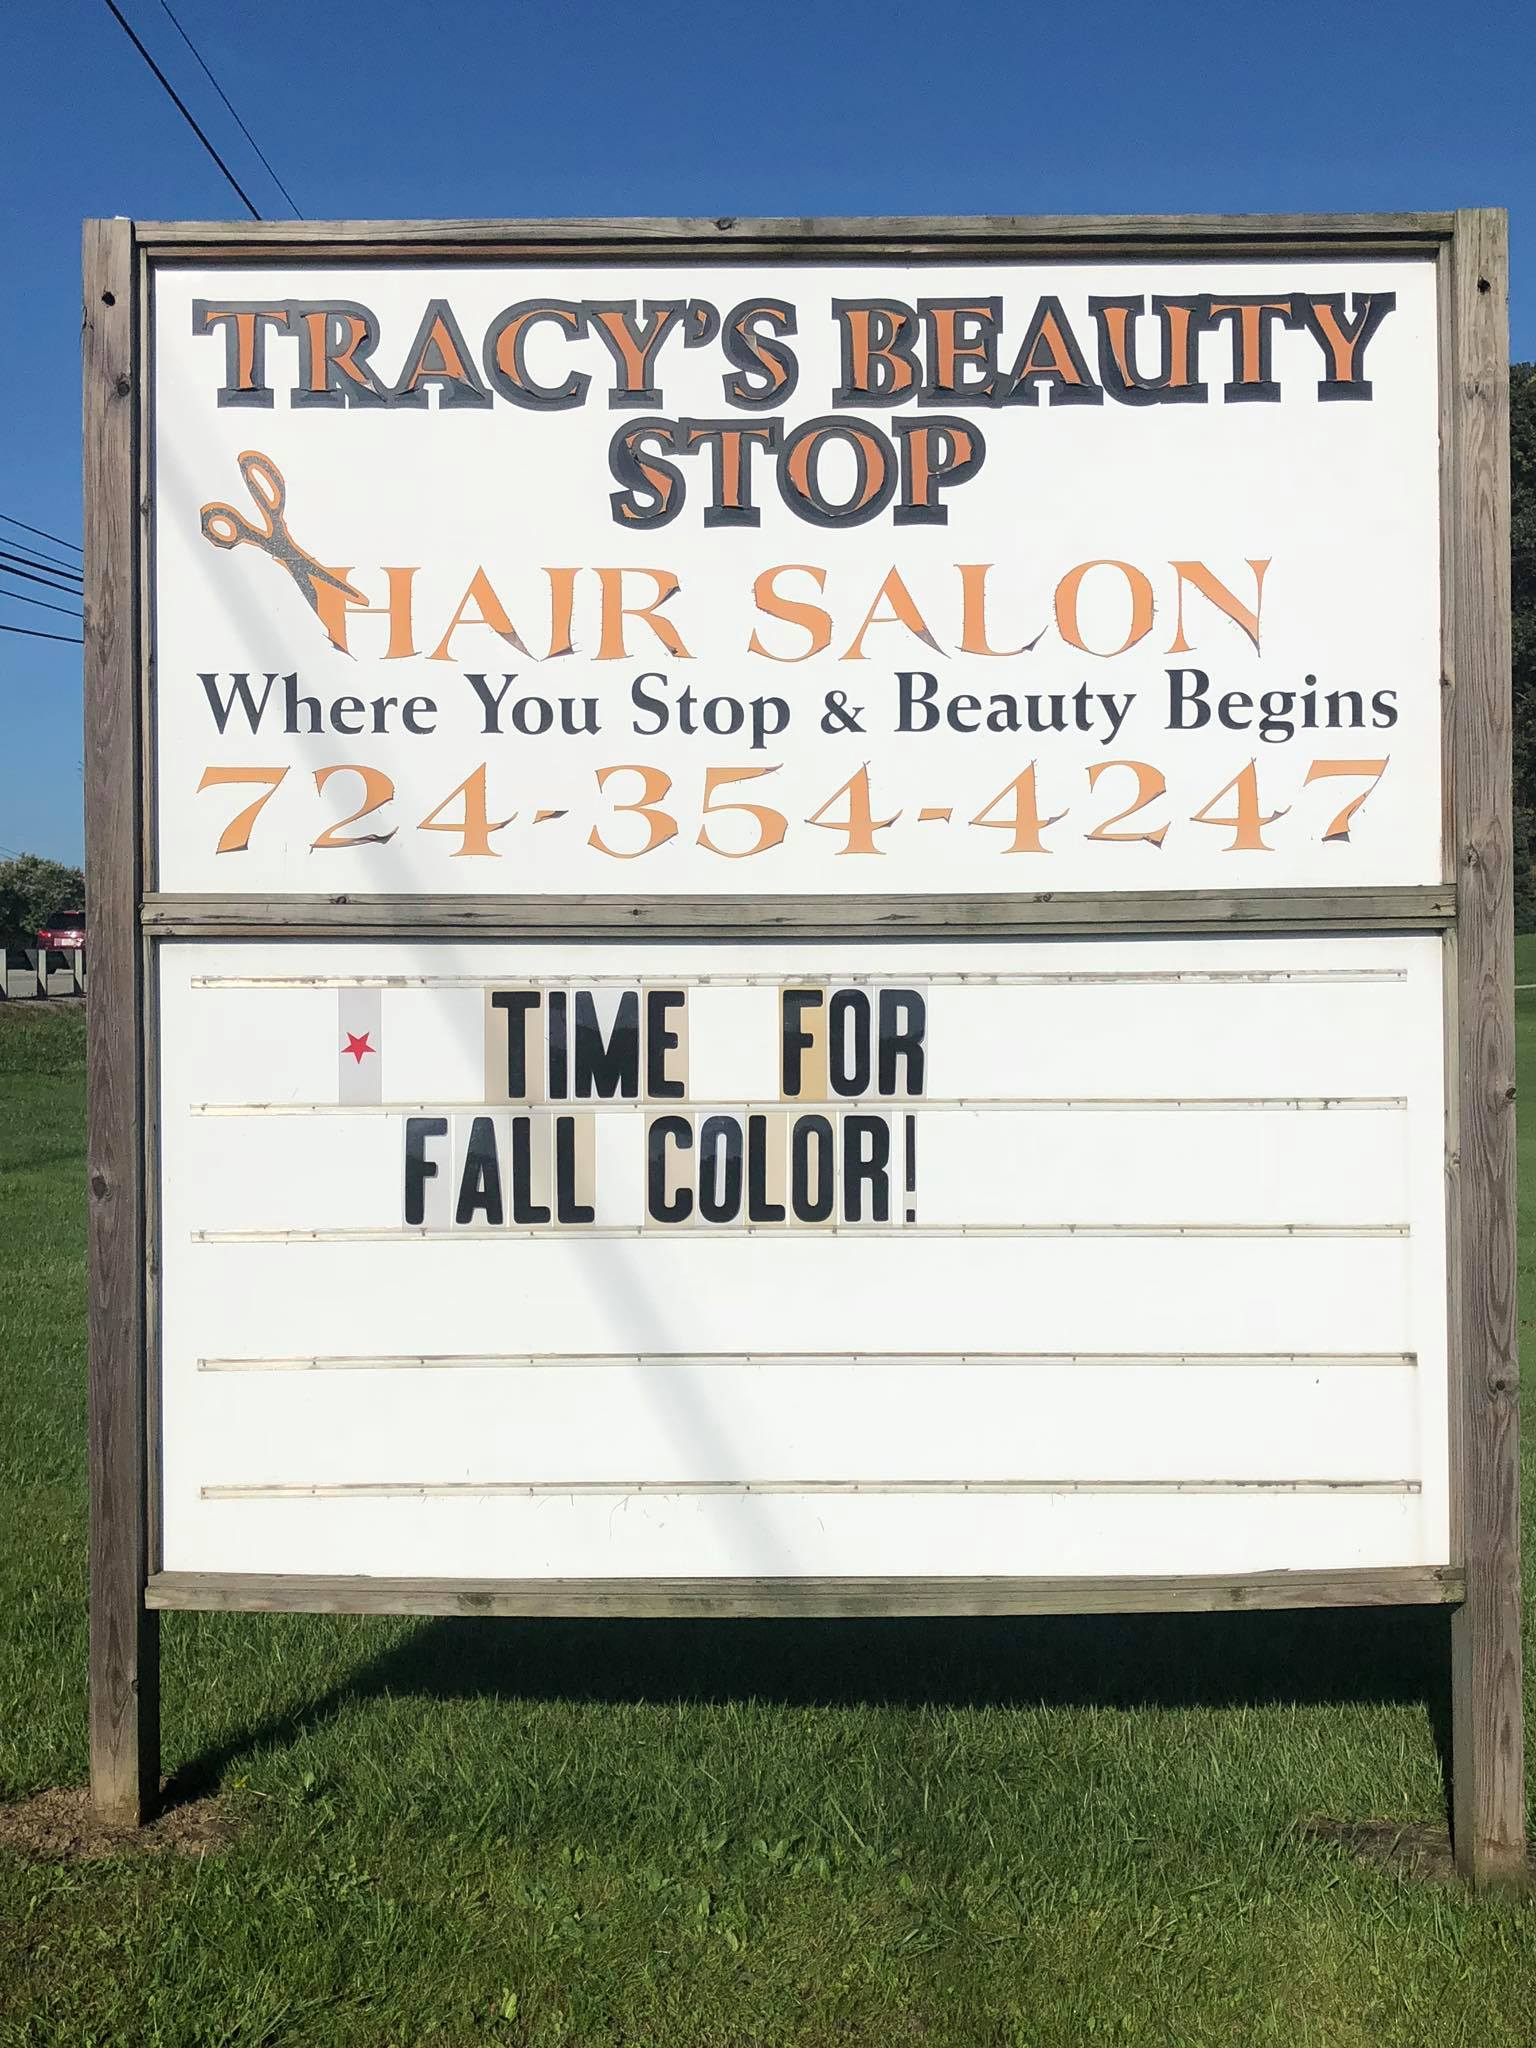 Tracy's Beauty Stop